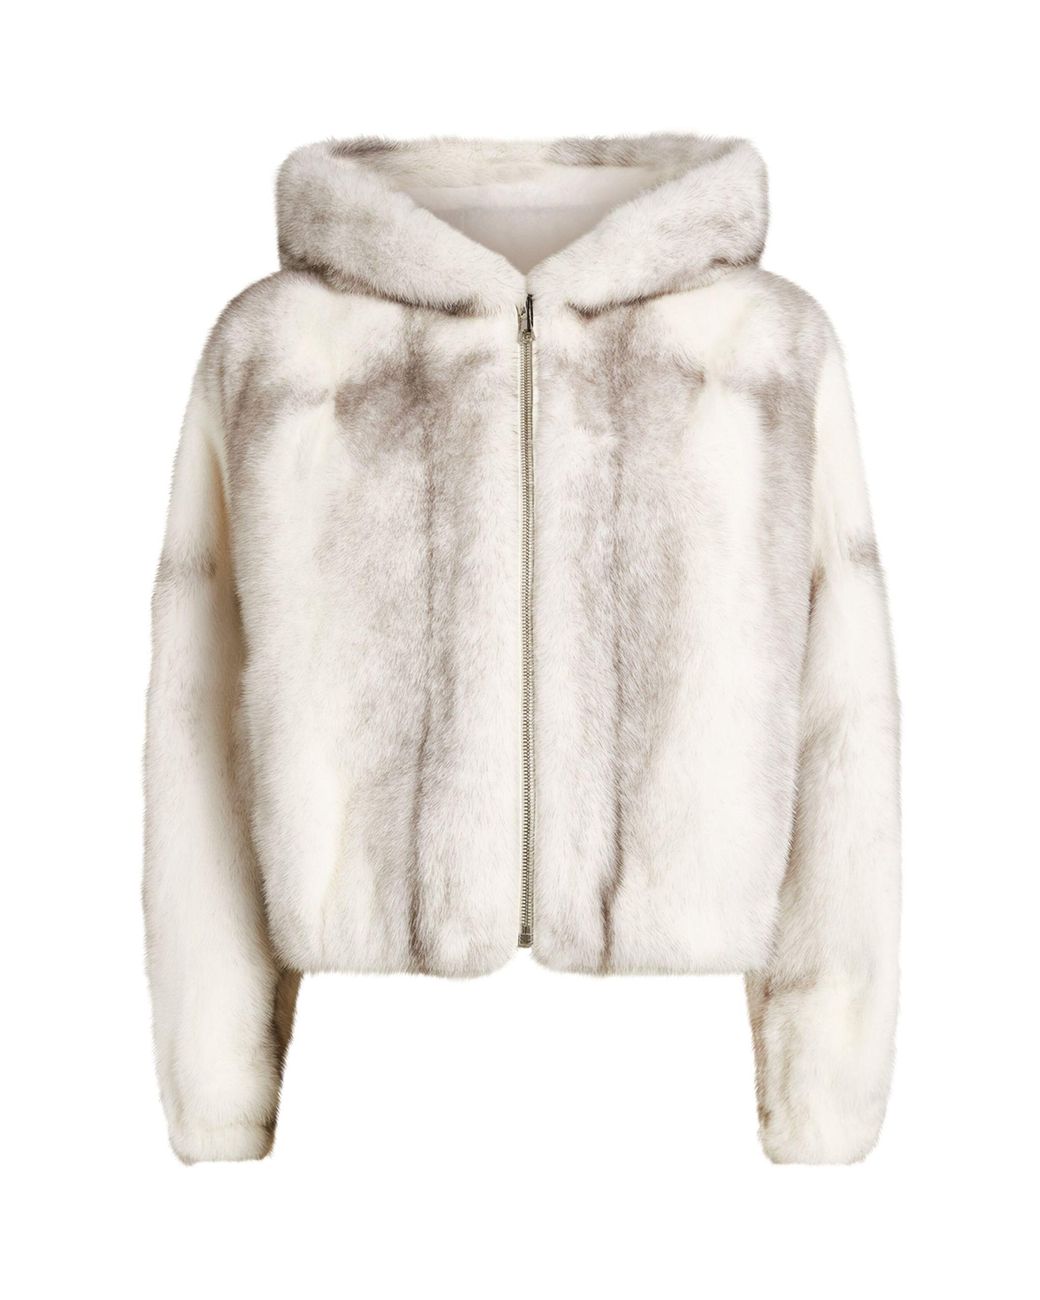 Yves Salomon Mink Fur Jacket in White | Lyst